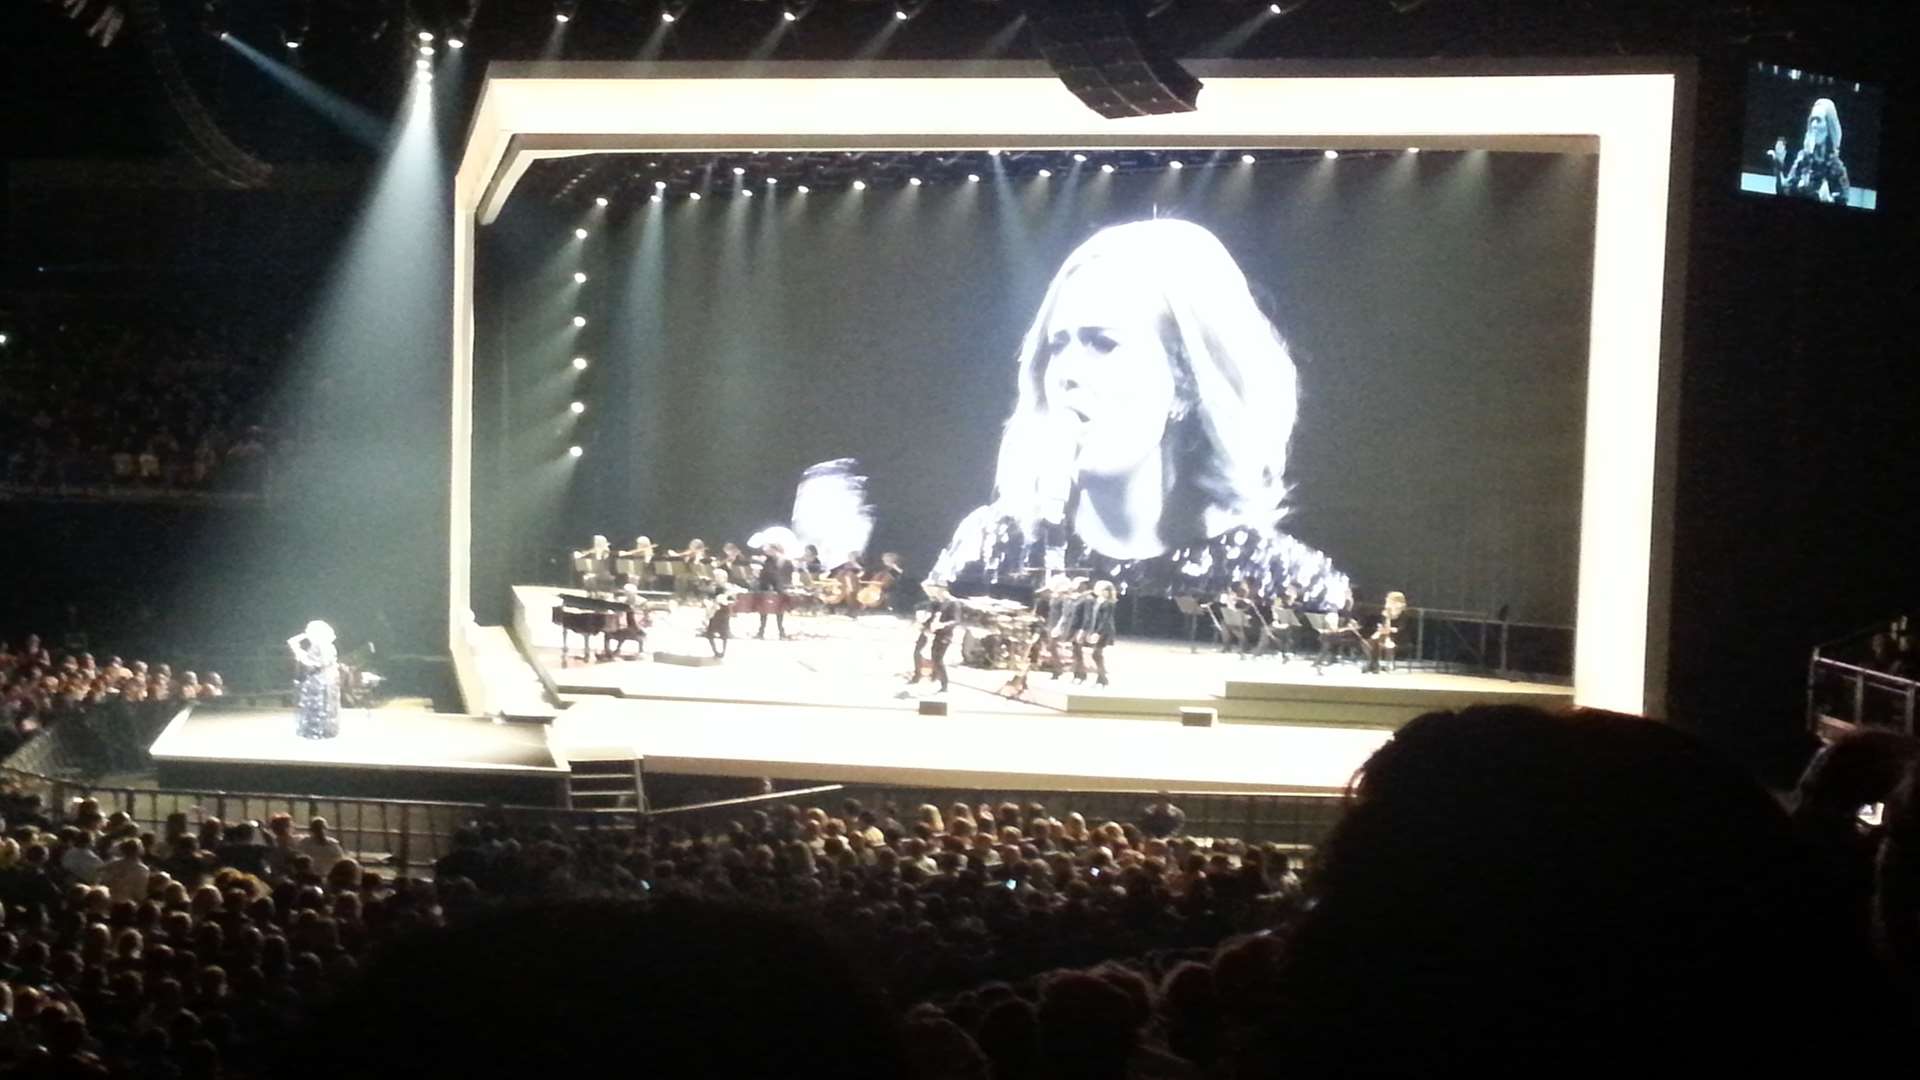 Adele's in concert